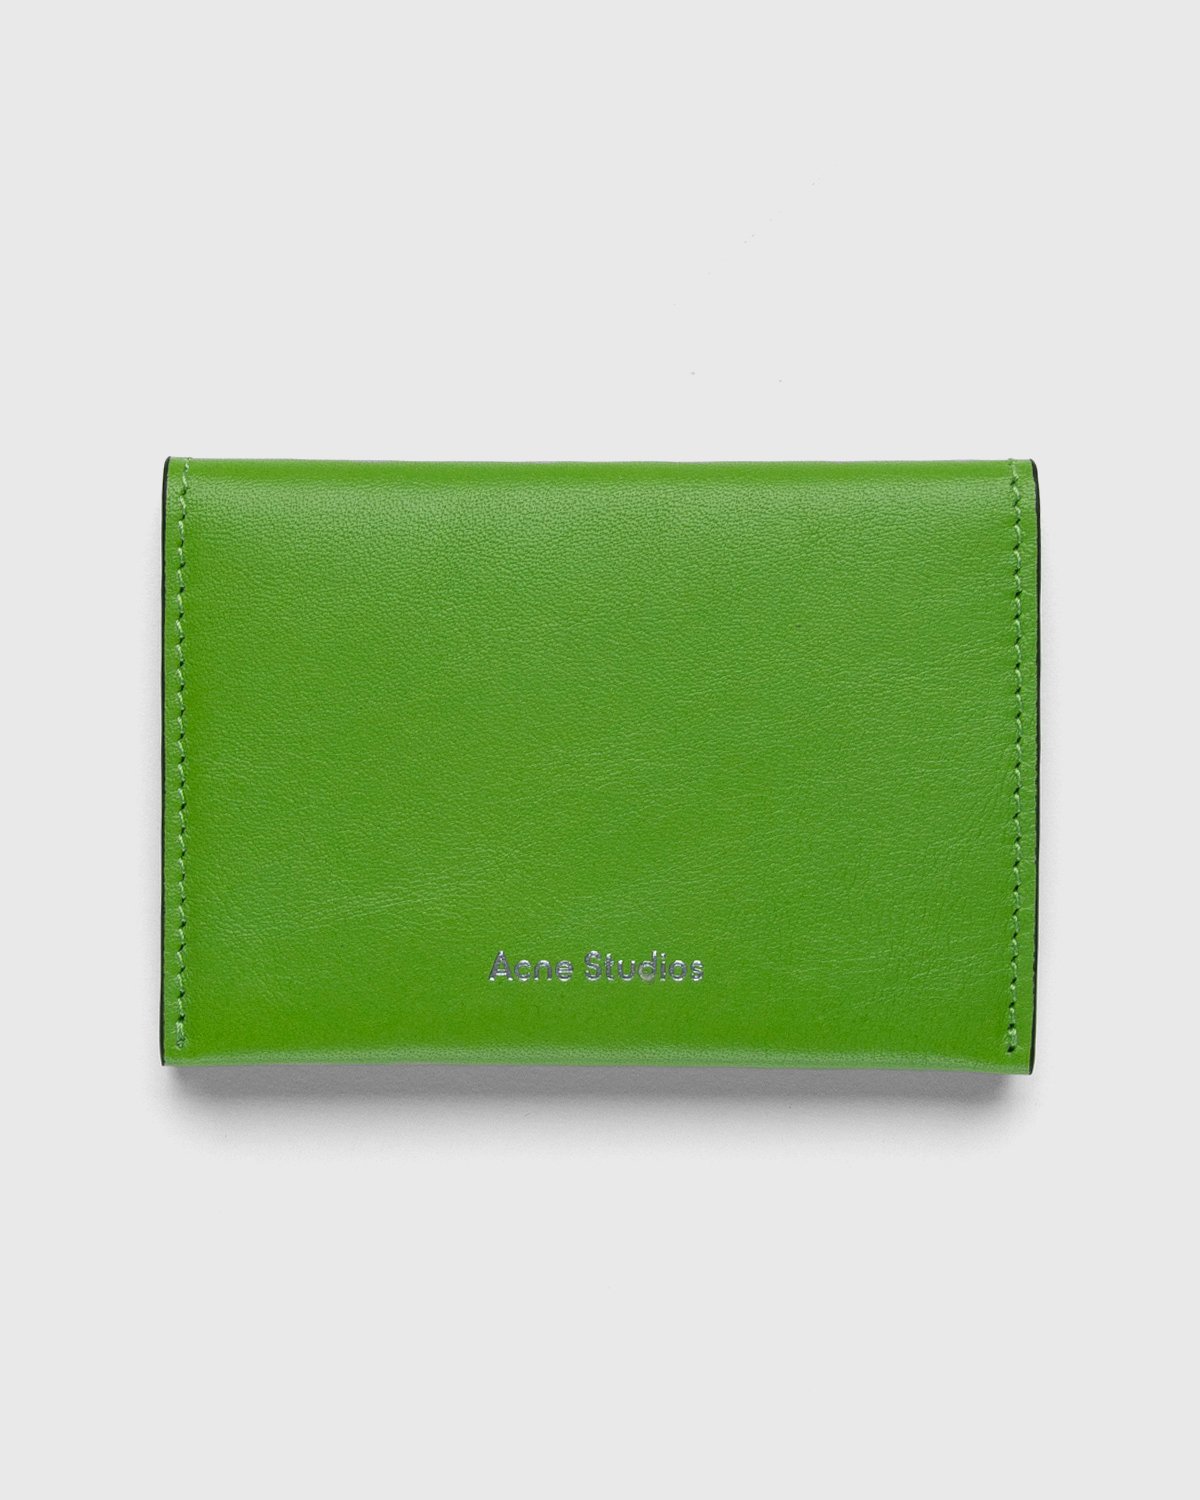 Acne Studios - Leather Card Case Multi Green - Accessories - Green - Image 1